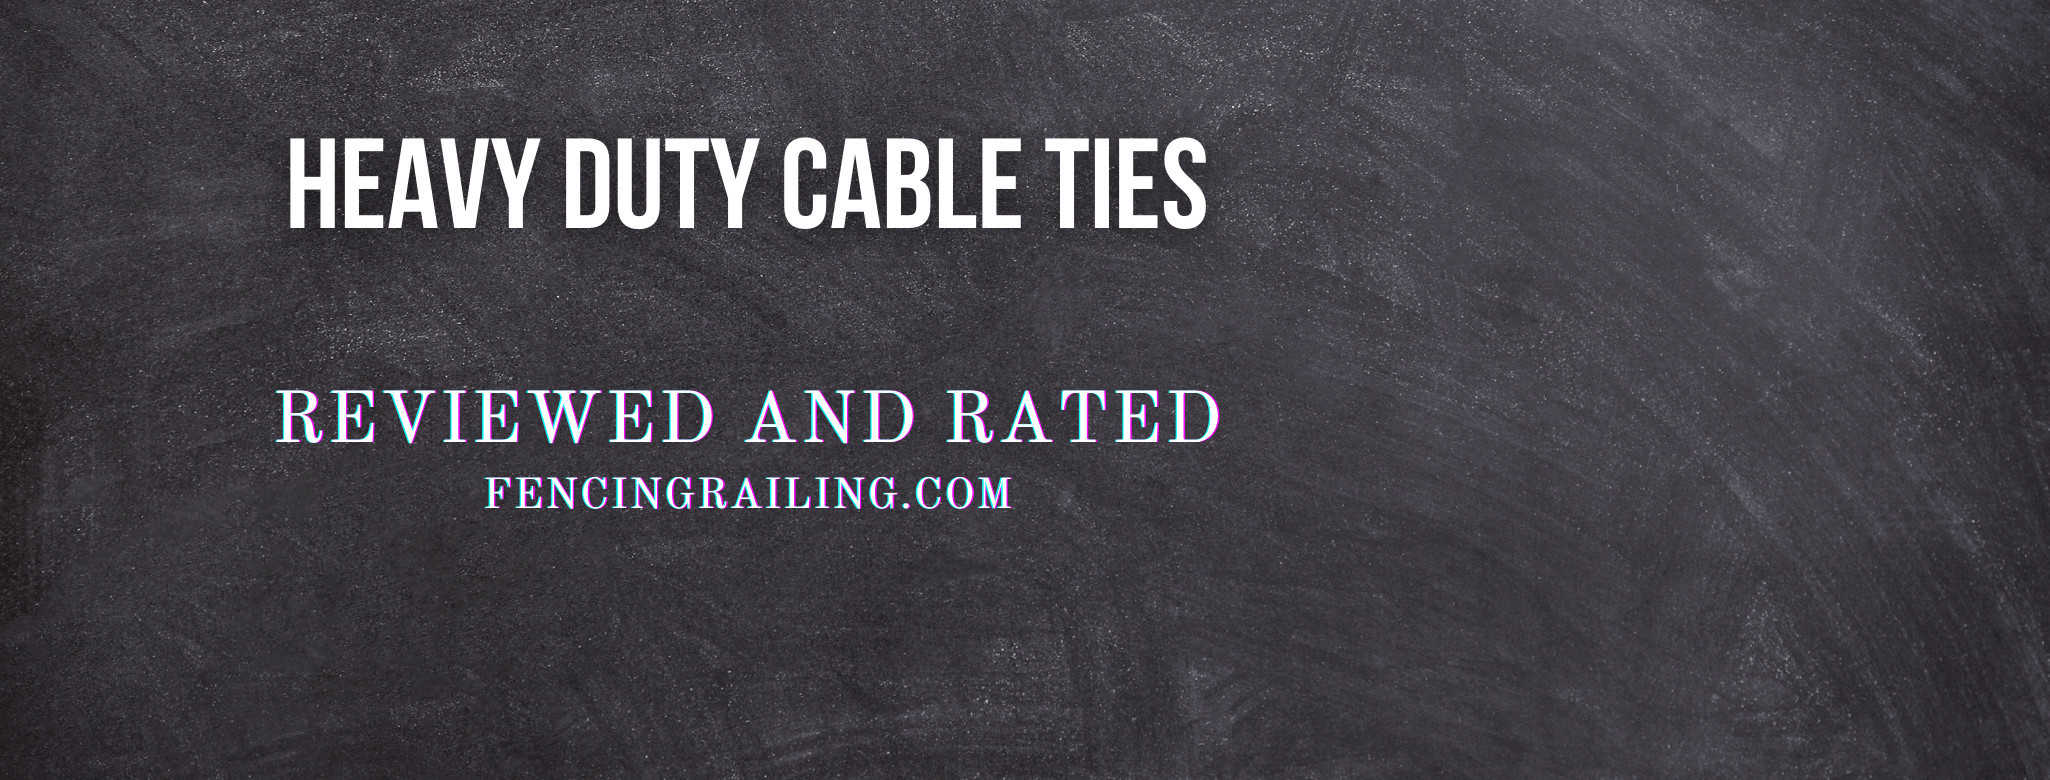 heavy duty cable ties